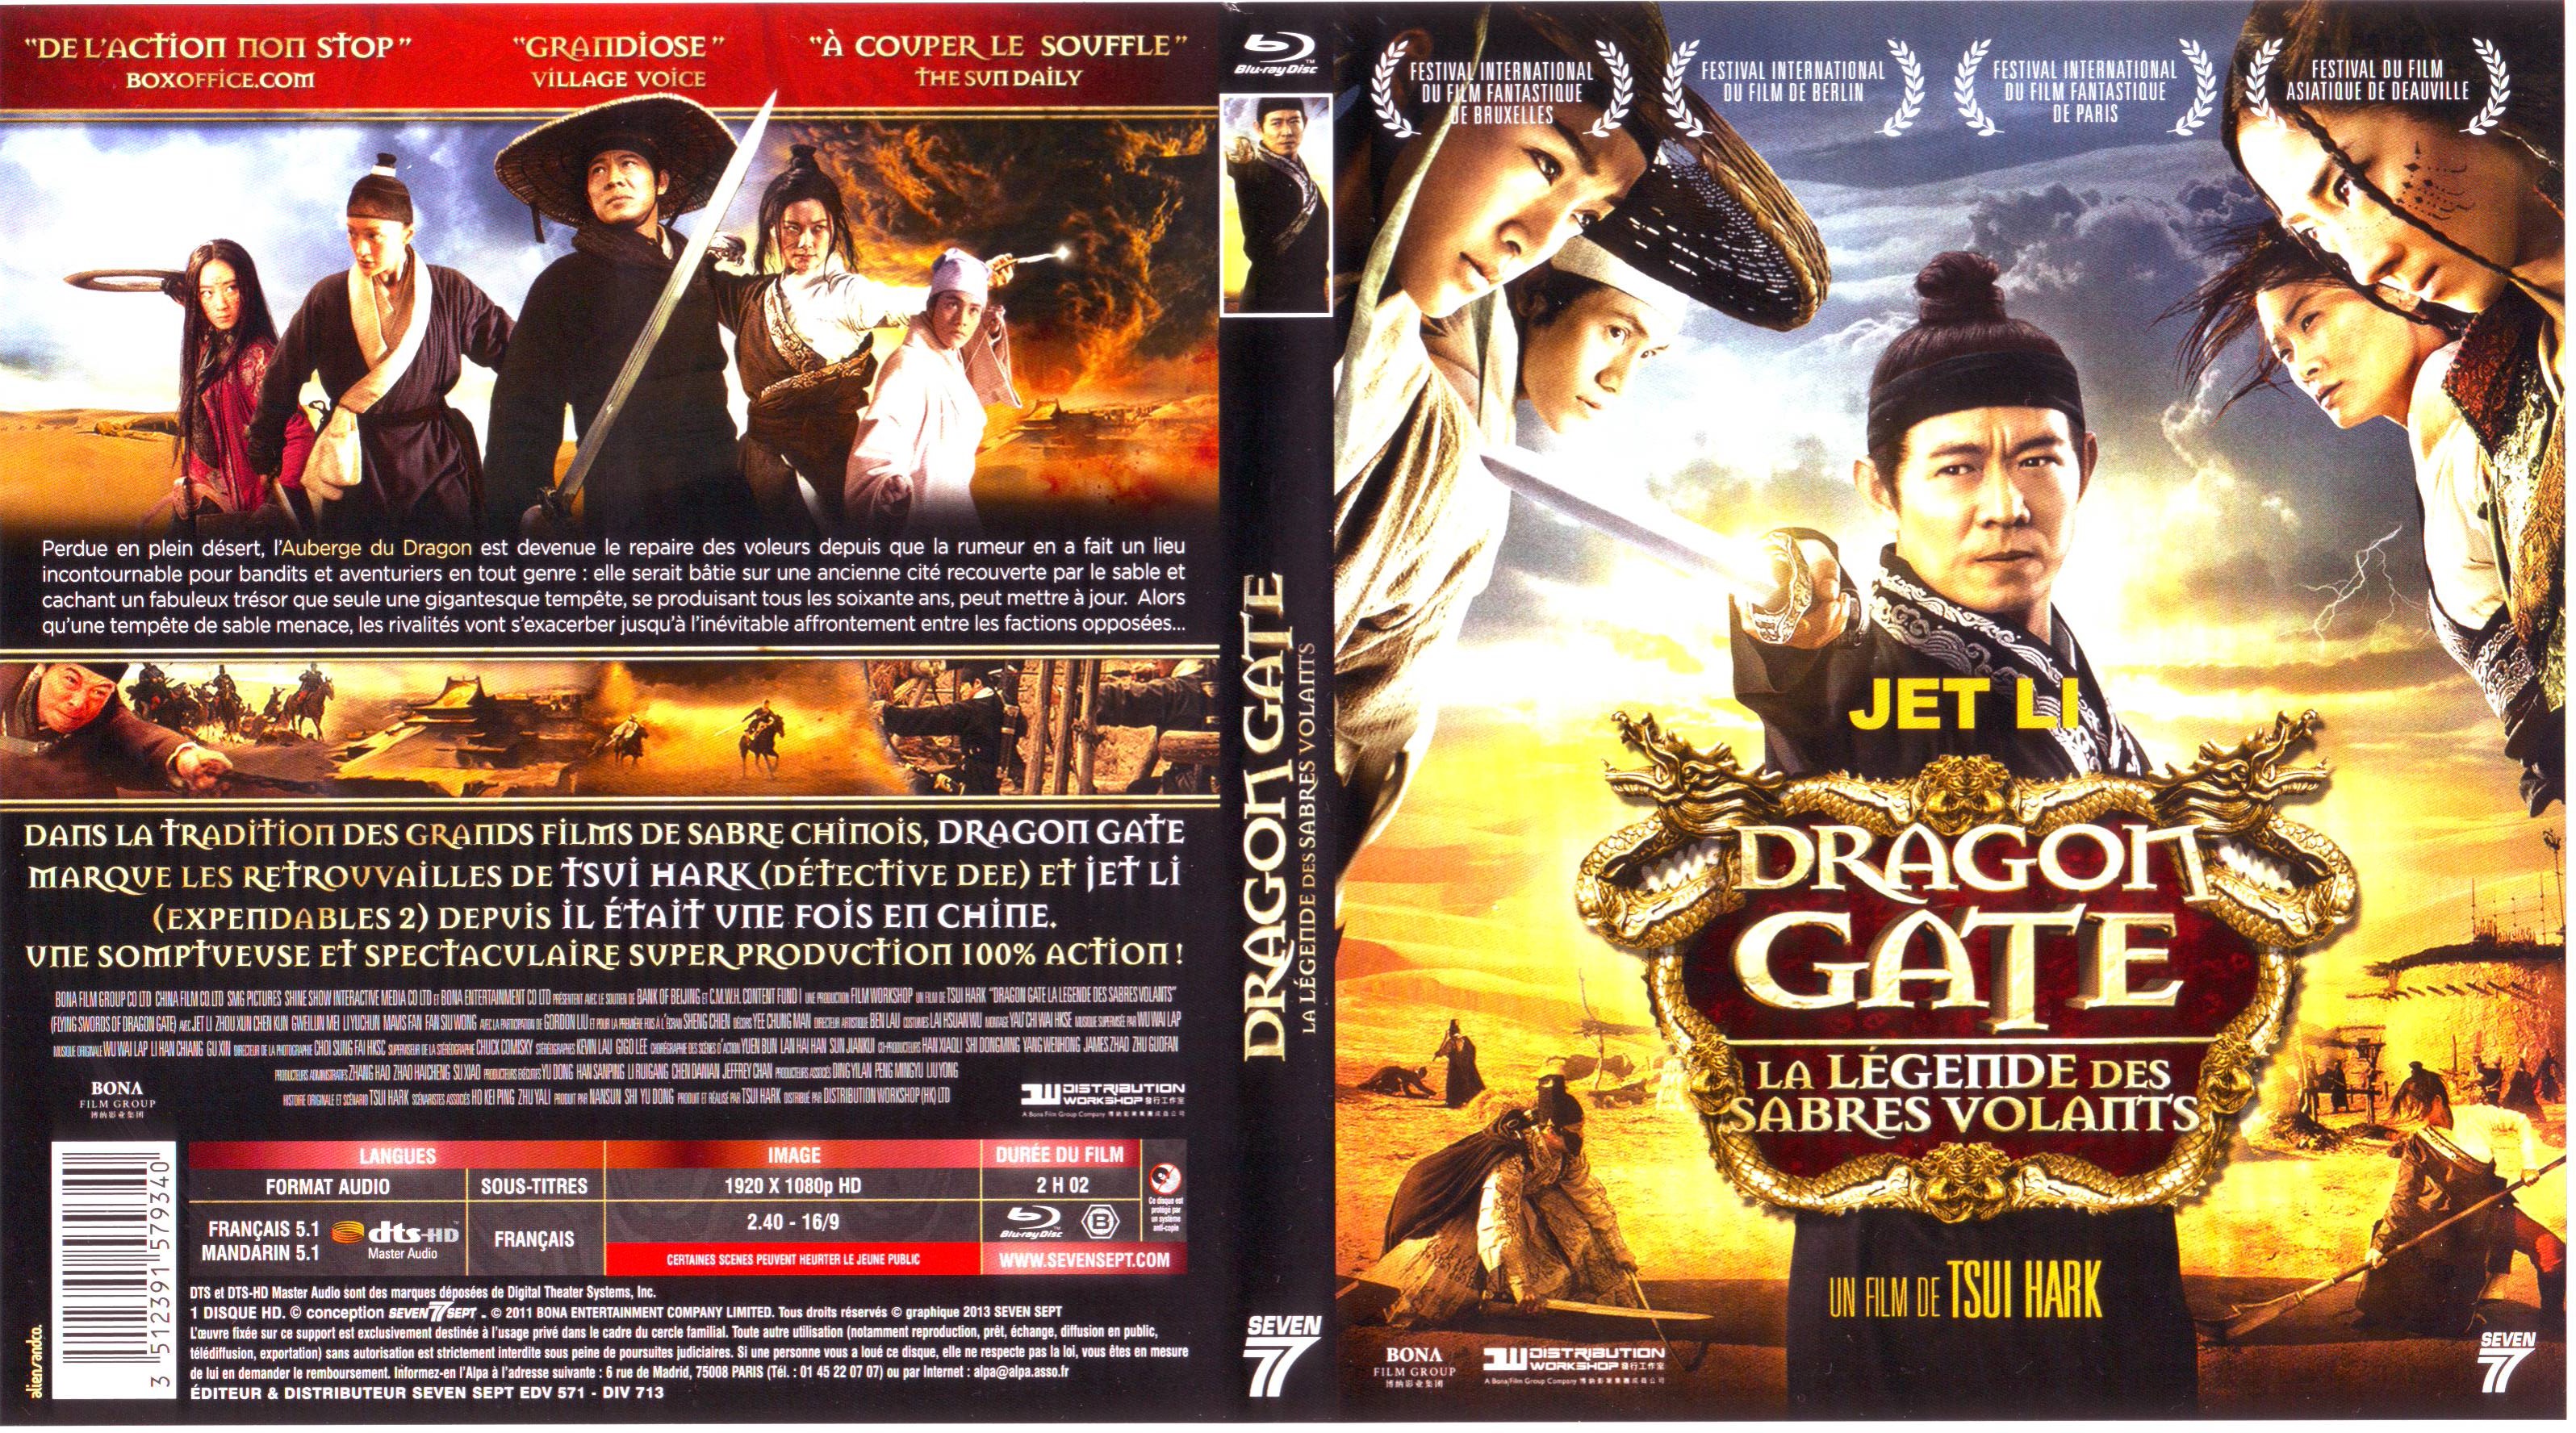 Jaquette DVD Dragon Gate, la lgende des sabres volants (BLU-RAY)